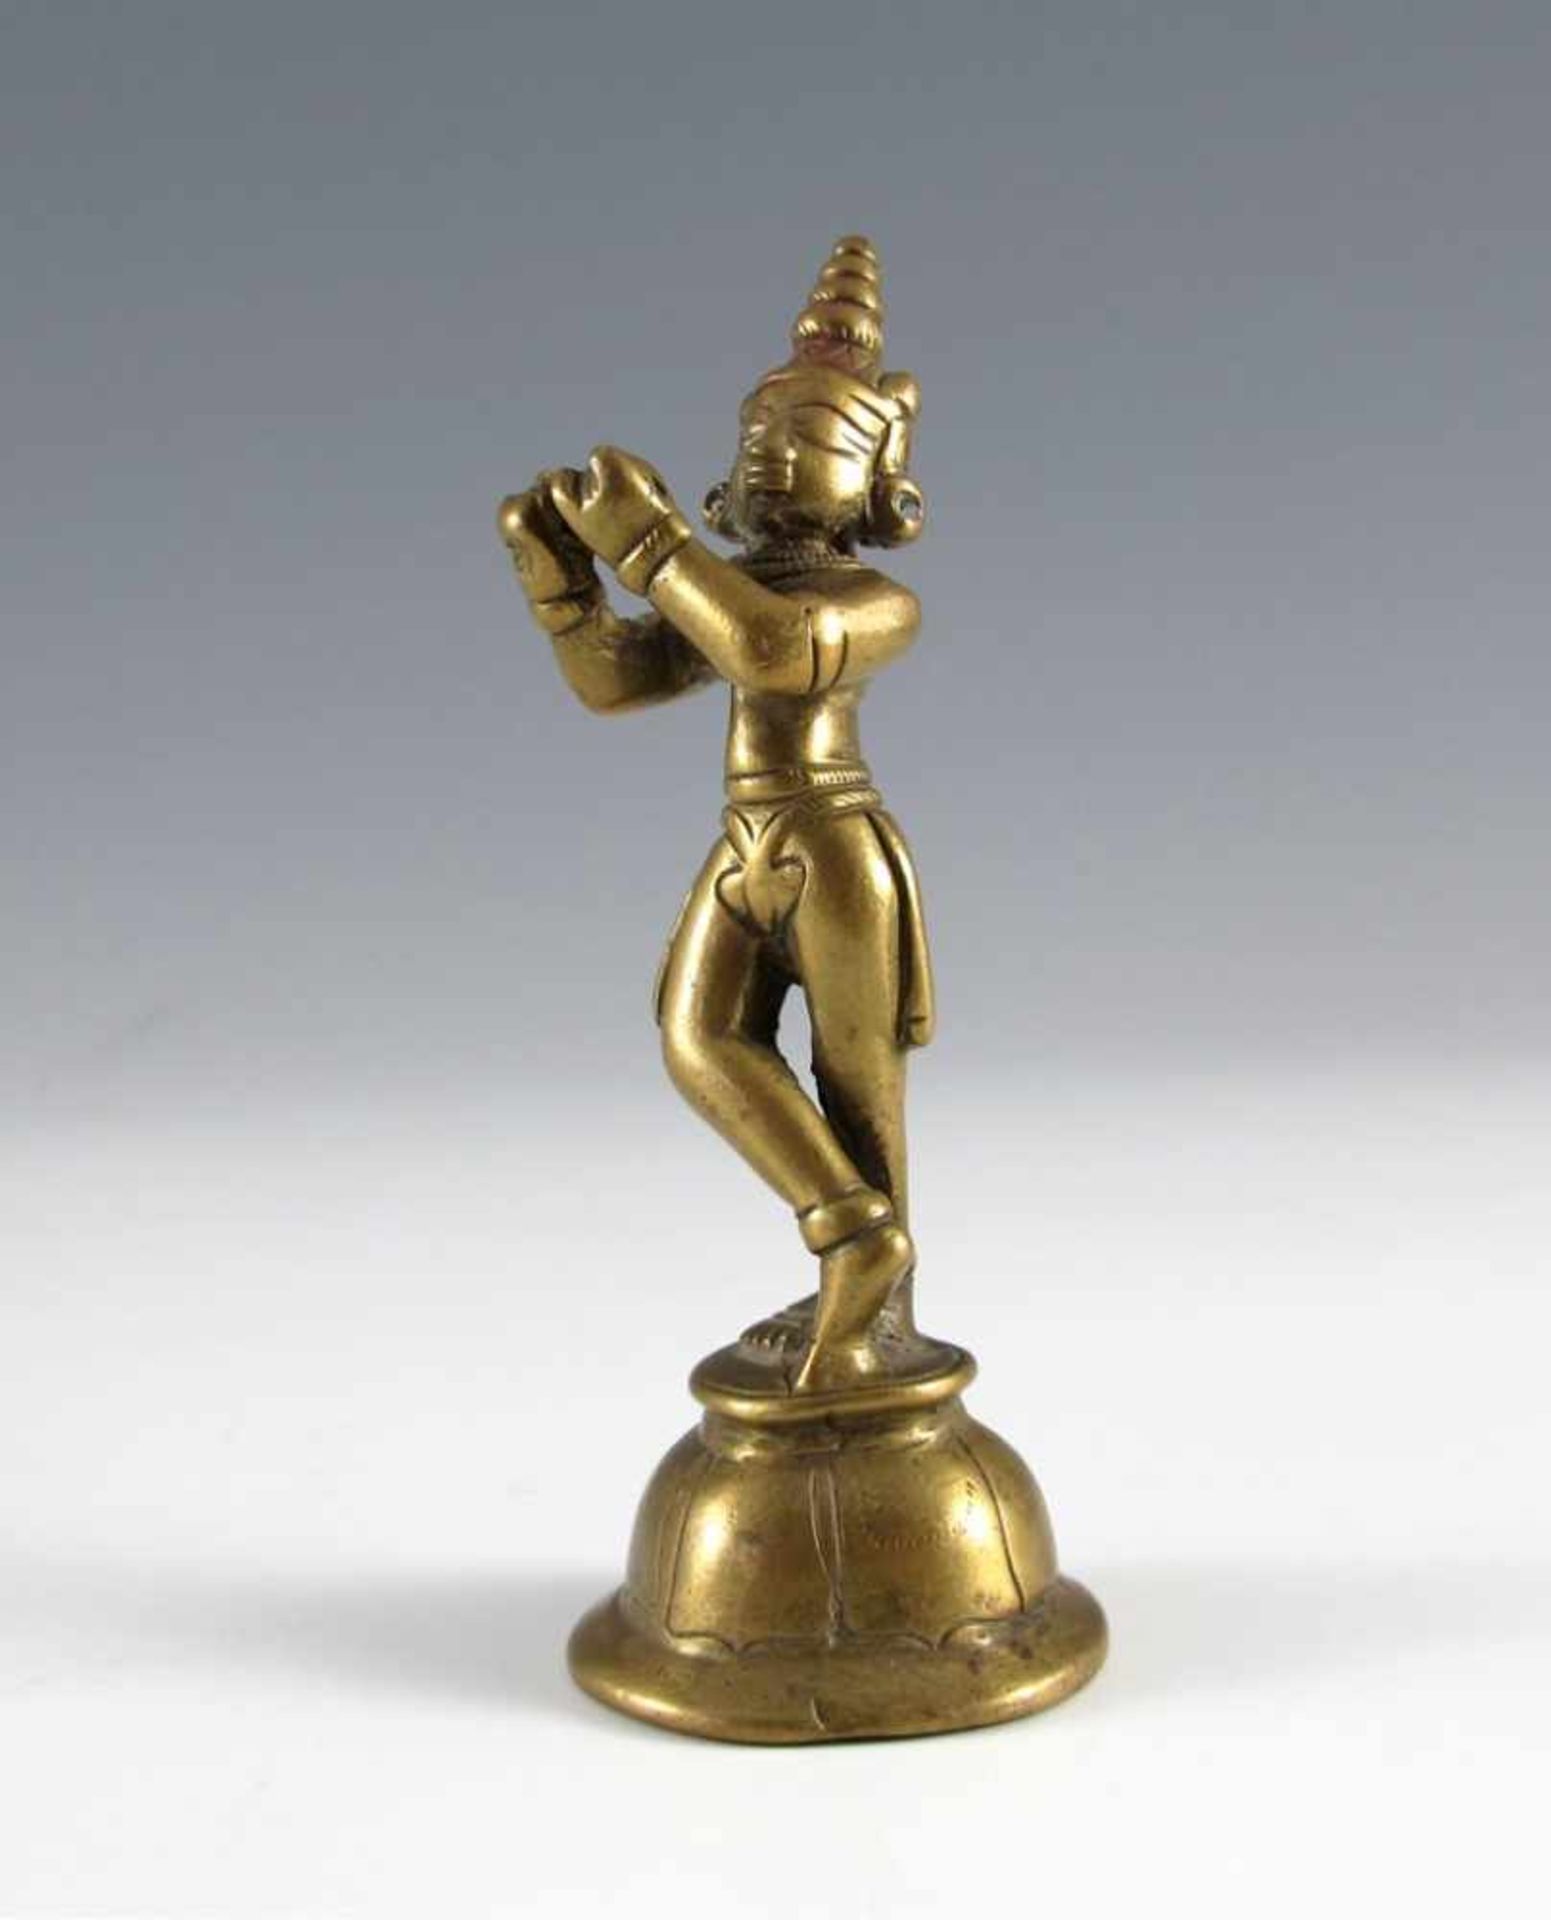 Votivgabe. Krishna. Messing. Orissa, 19. Jh. H 12,5 cm